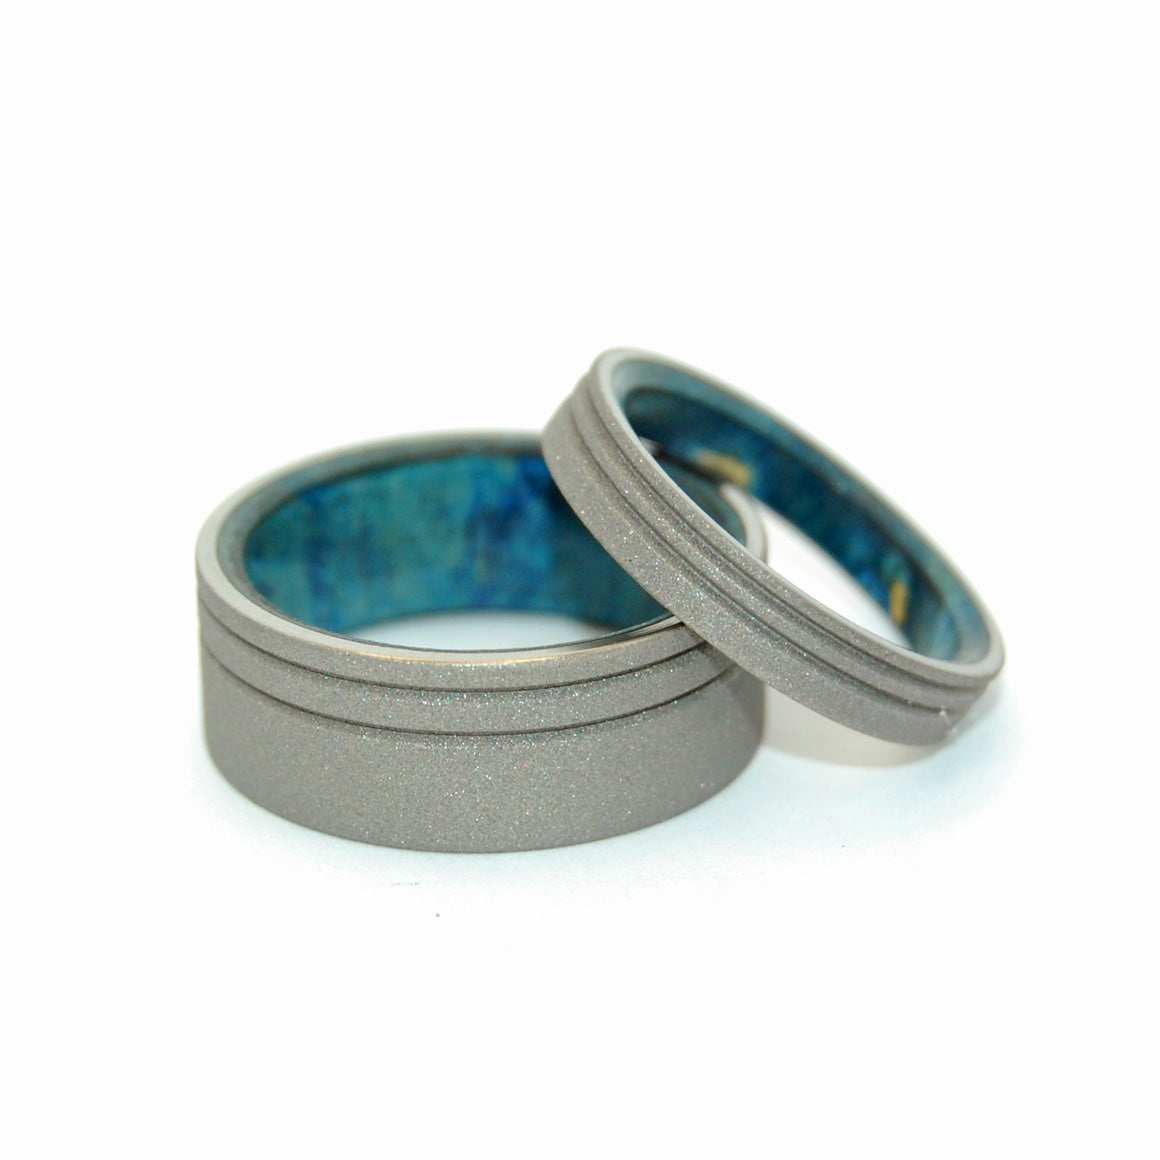 BELIEVE IN YOU | Sandblasted Blue Box Elder Wood & Titanium Wedding Rings set - Minter and Richter Designs